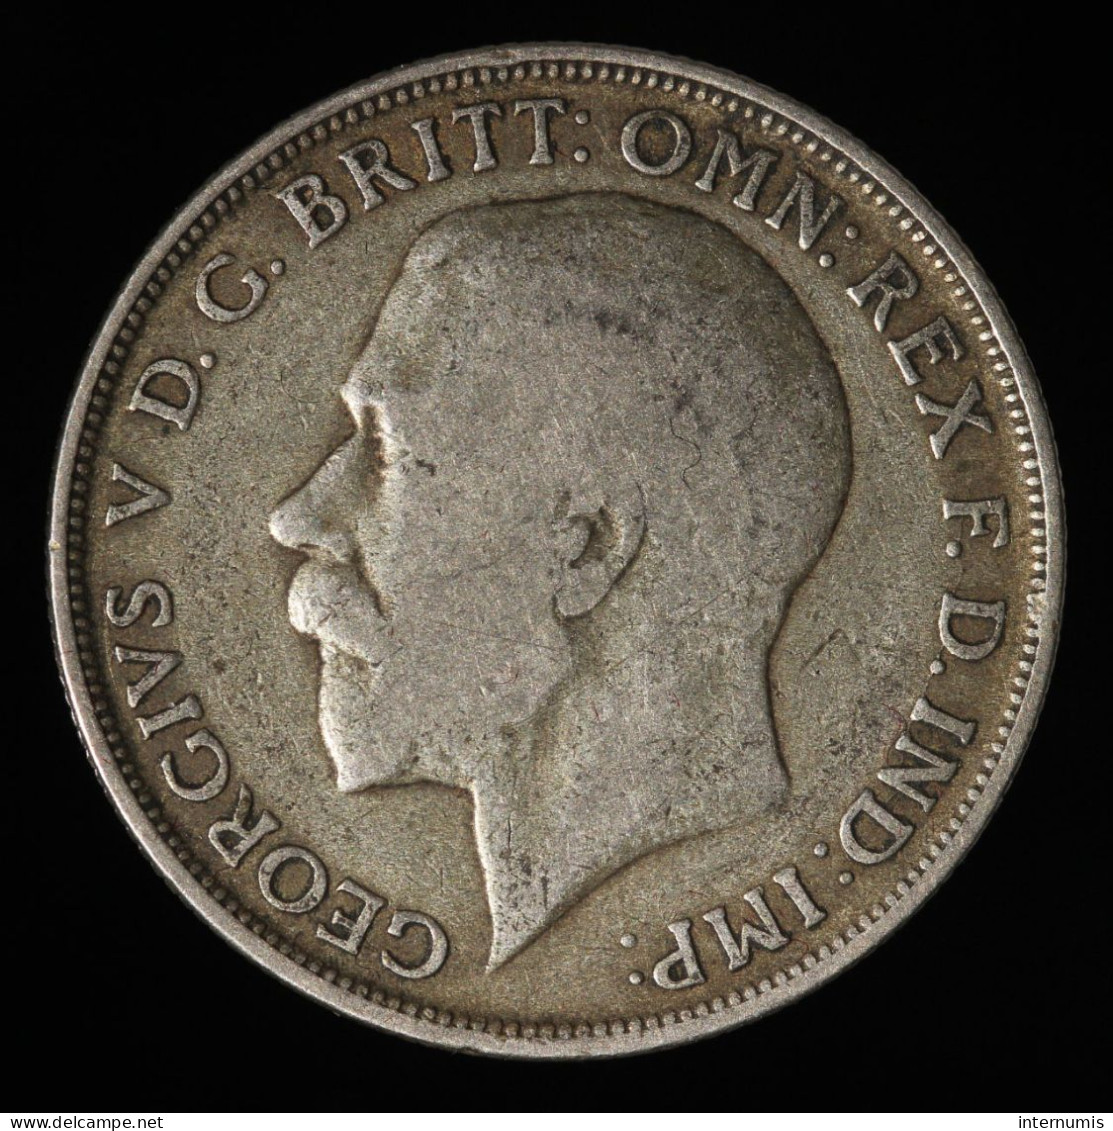  Grande-Bretagne / United Kingdom, George V, 1 Florin, 1920, , Argent (Silver), TB+ (VF),
KM#817a - J. 1 Florin / 2 Shillings